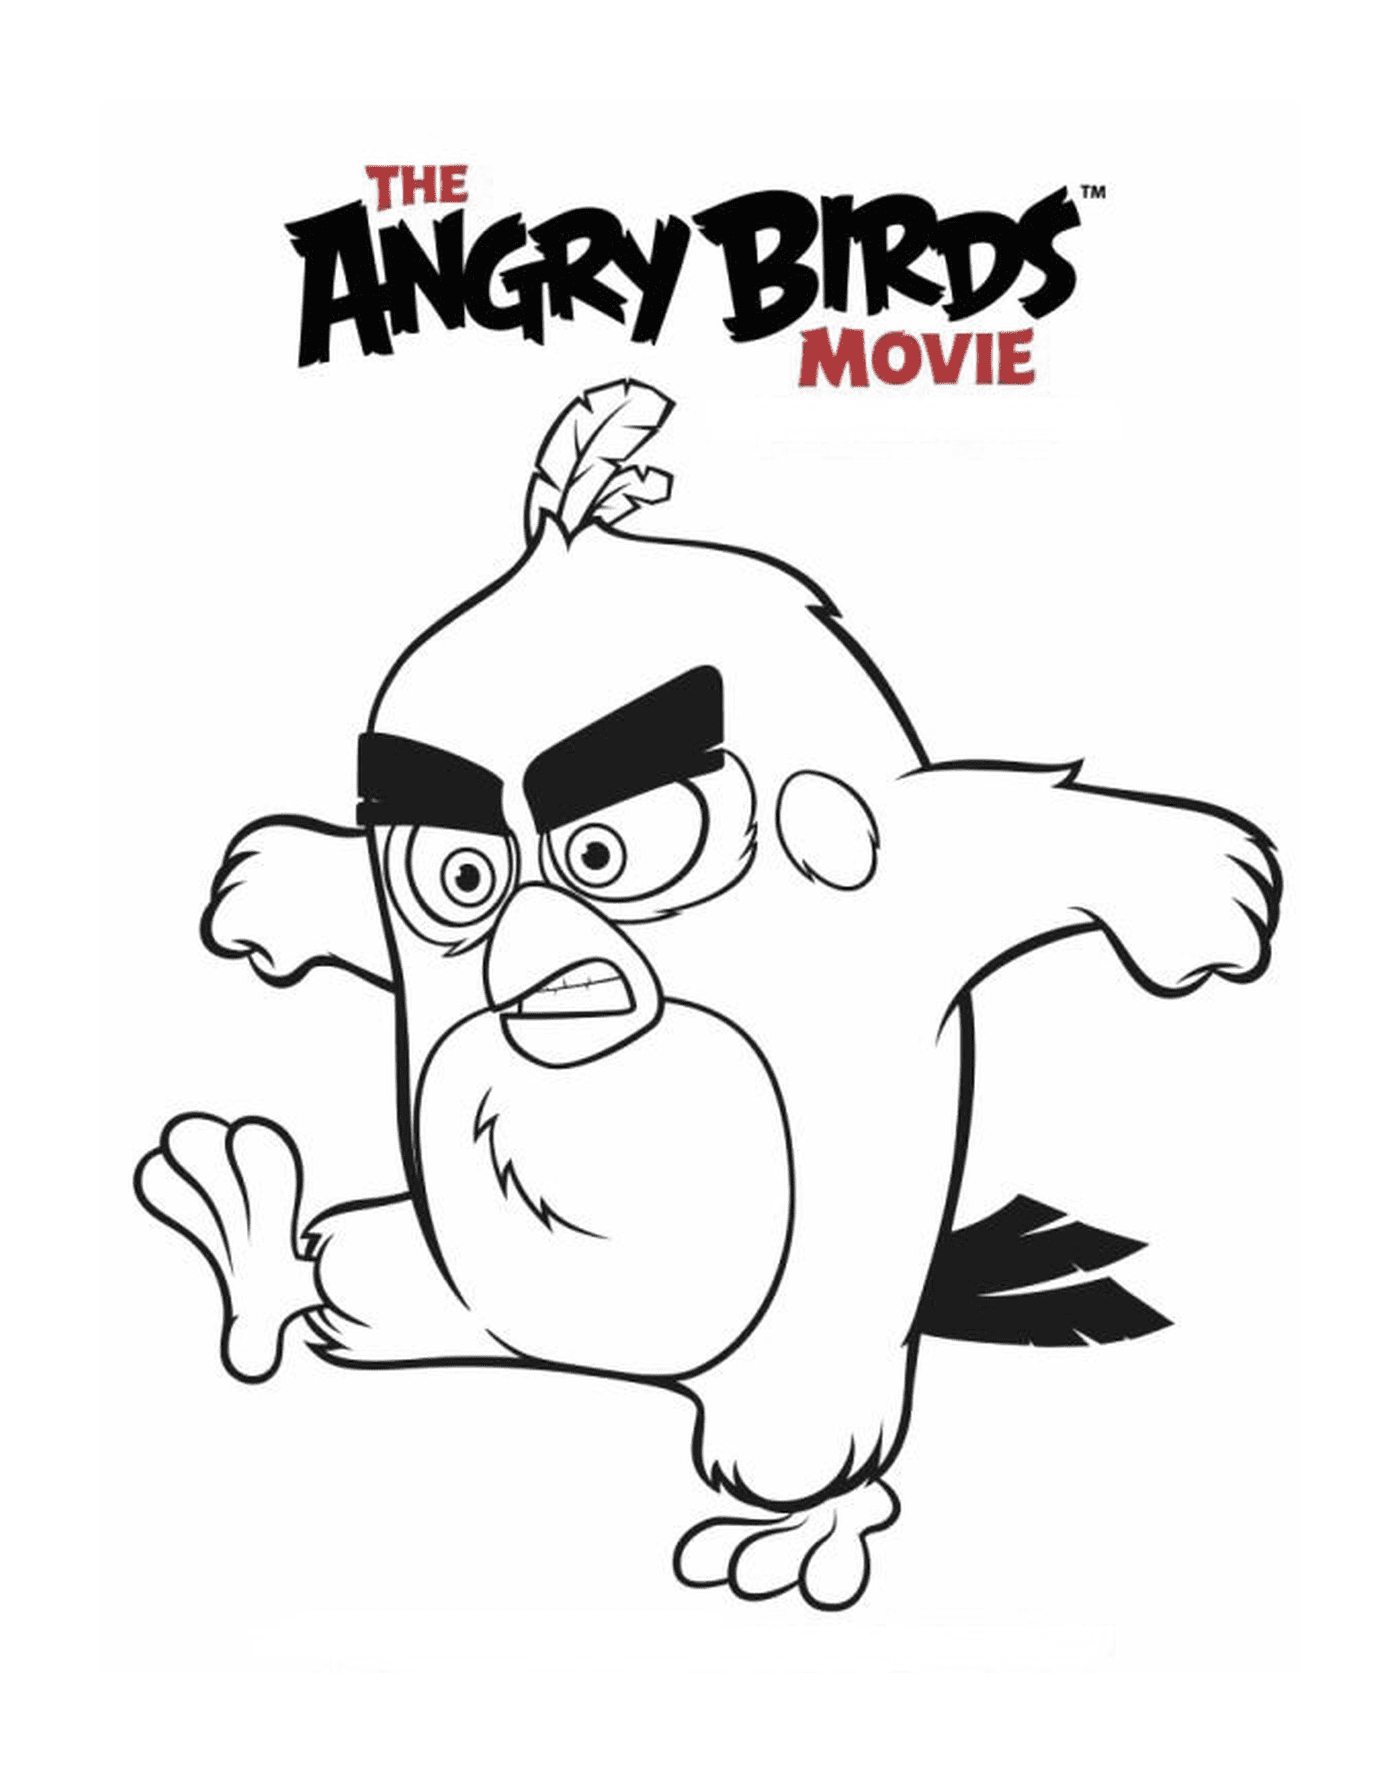  Wütende Vögel der Film 